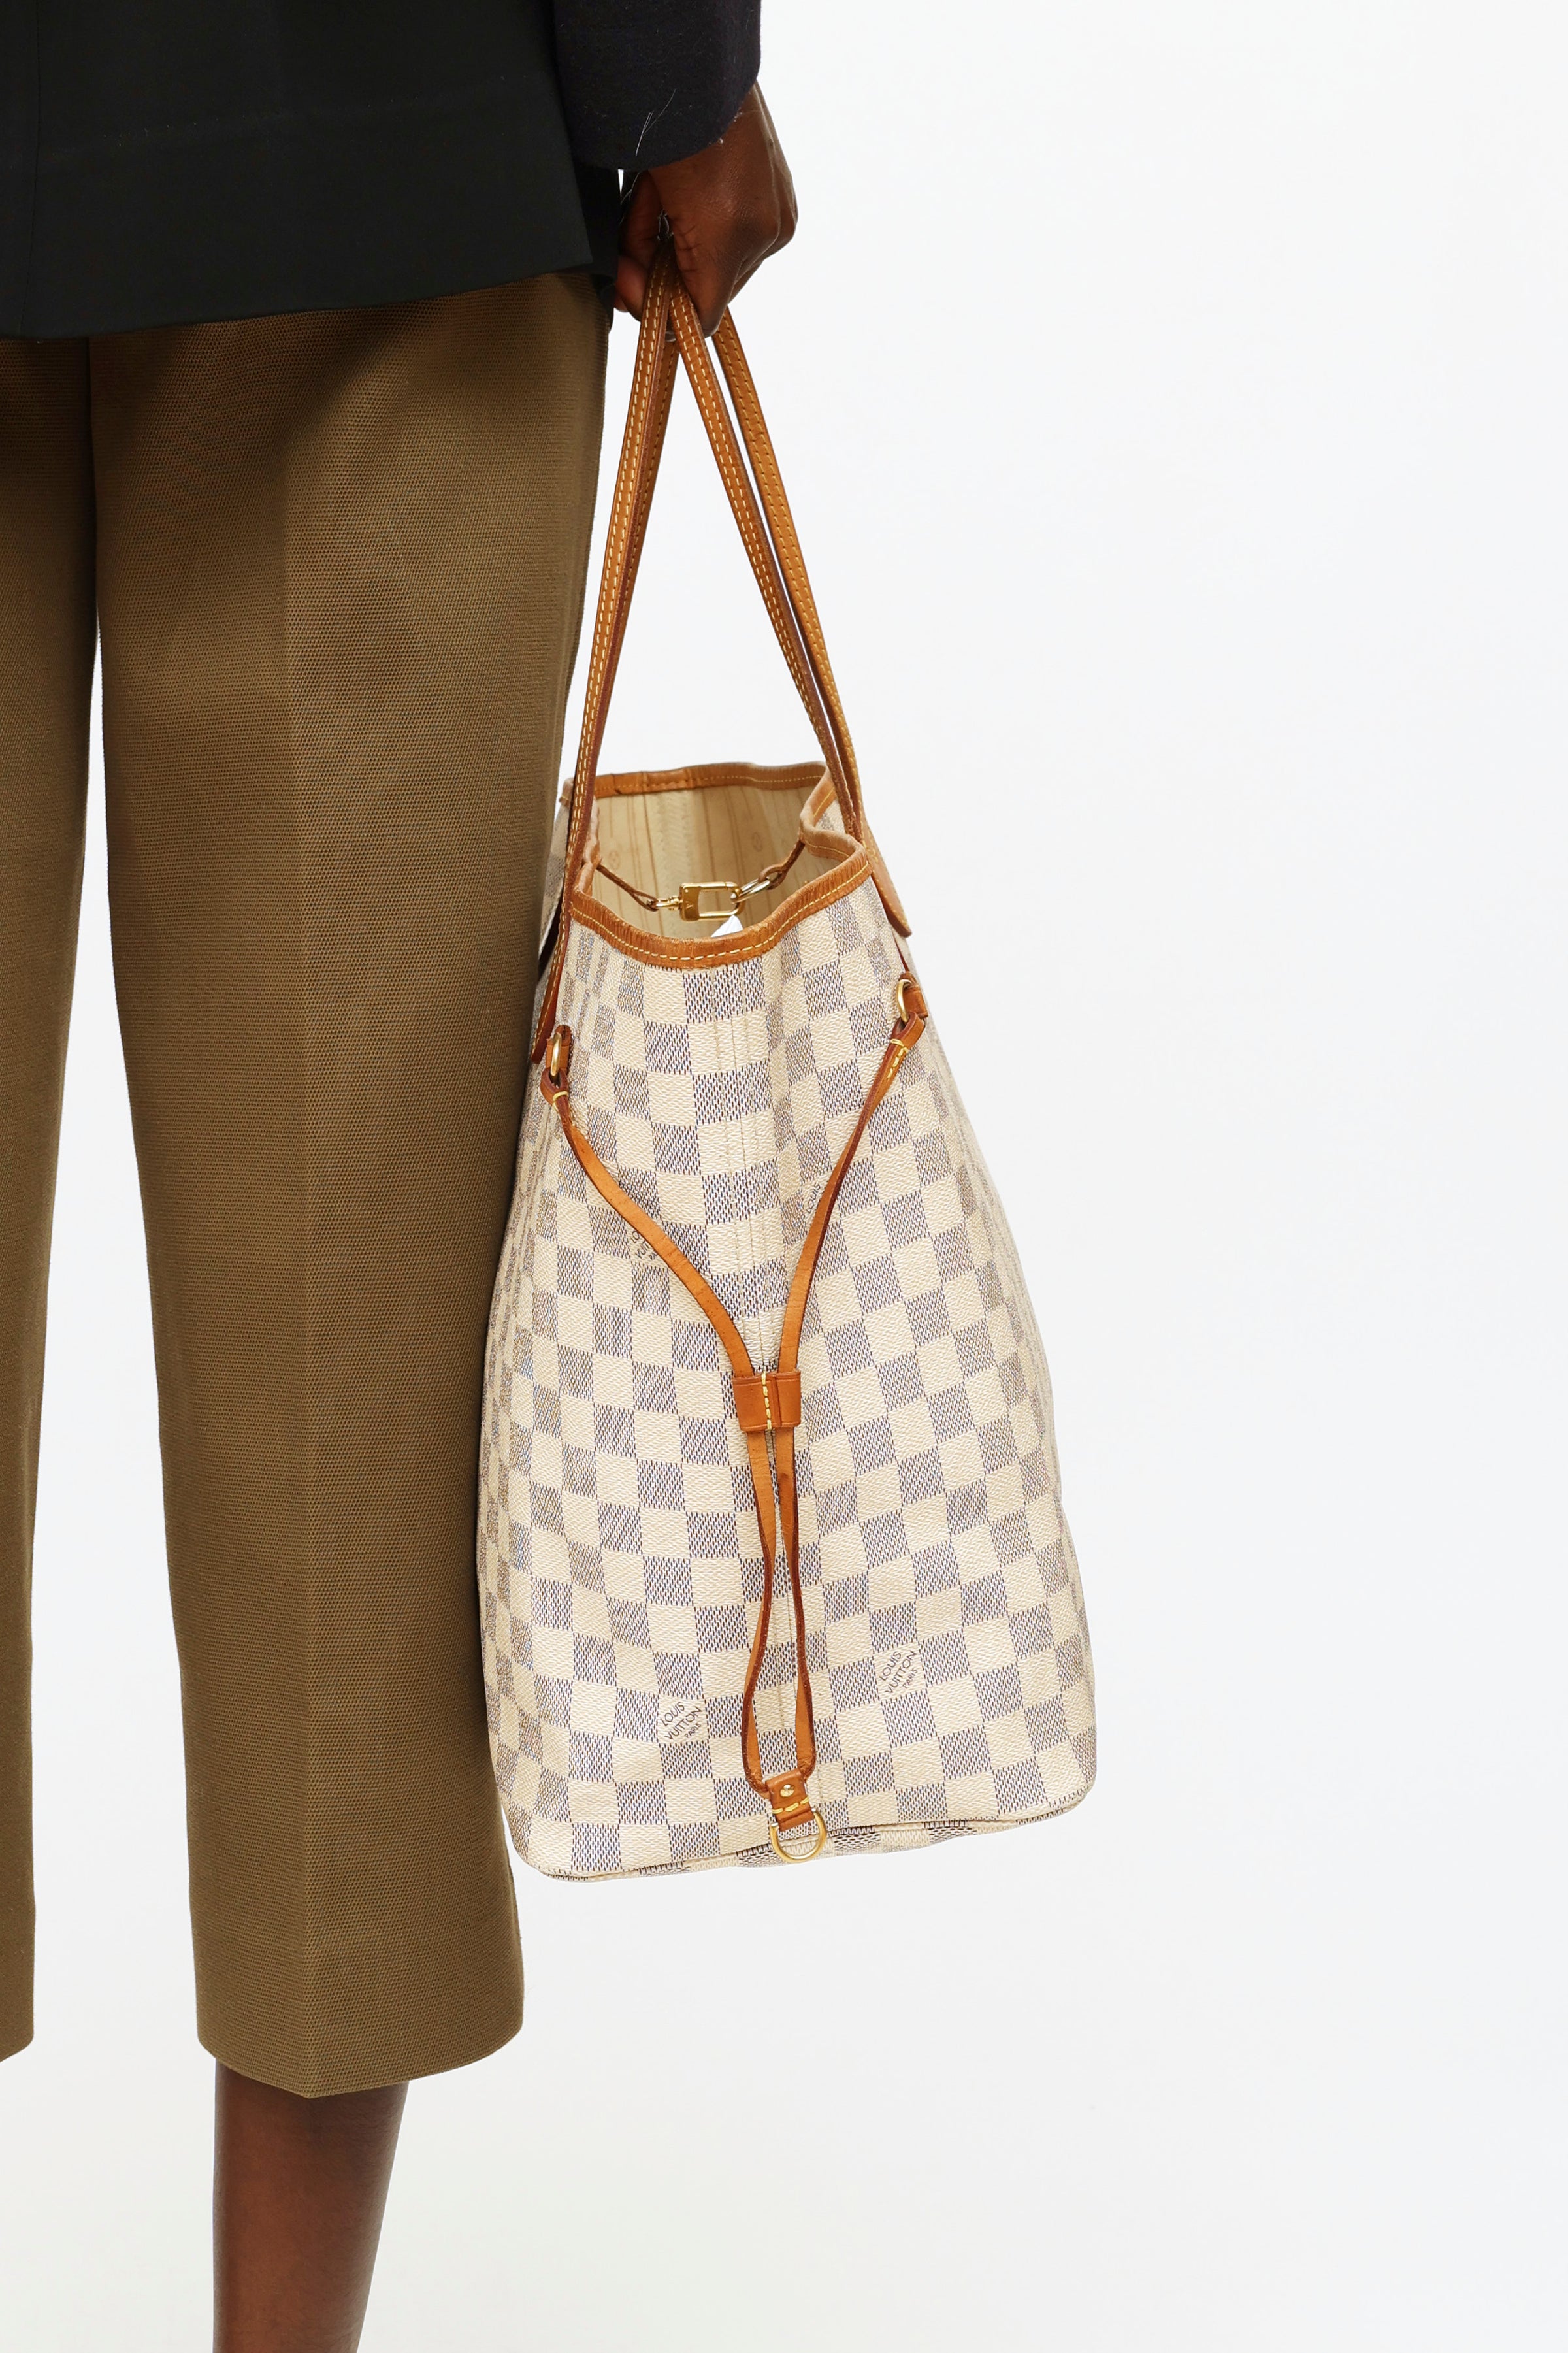 Authentic Louis Vuitton Neverfull MM Azur Damier Tote Bag